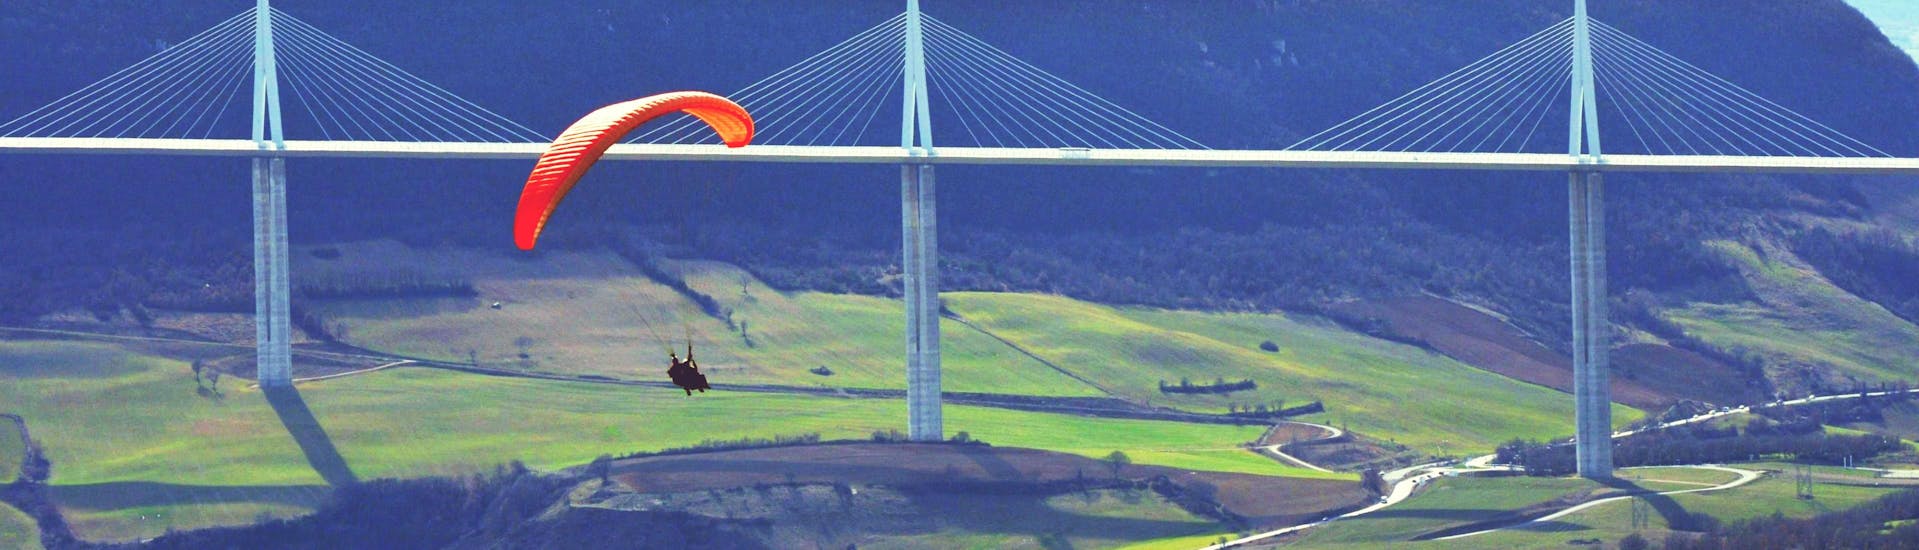 Thermisch tandem paragliding in Millau (vanaf 4 j.) - Grands Causses (regionaal natuurpark).